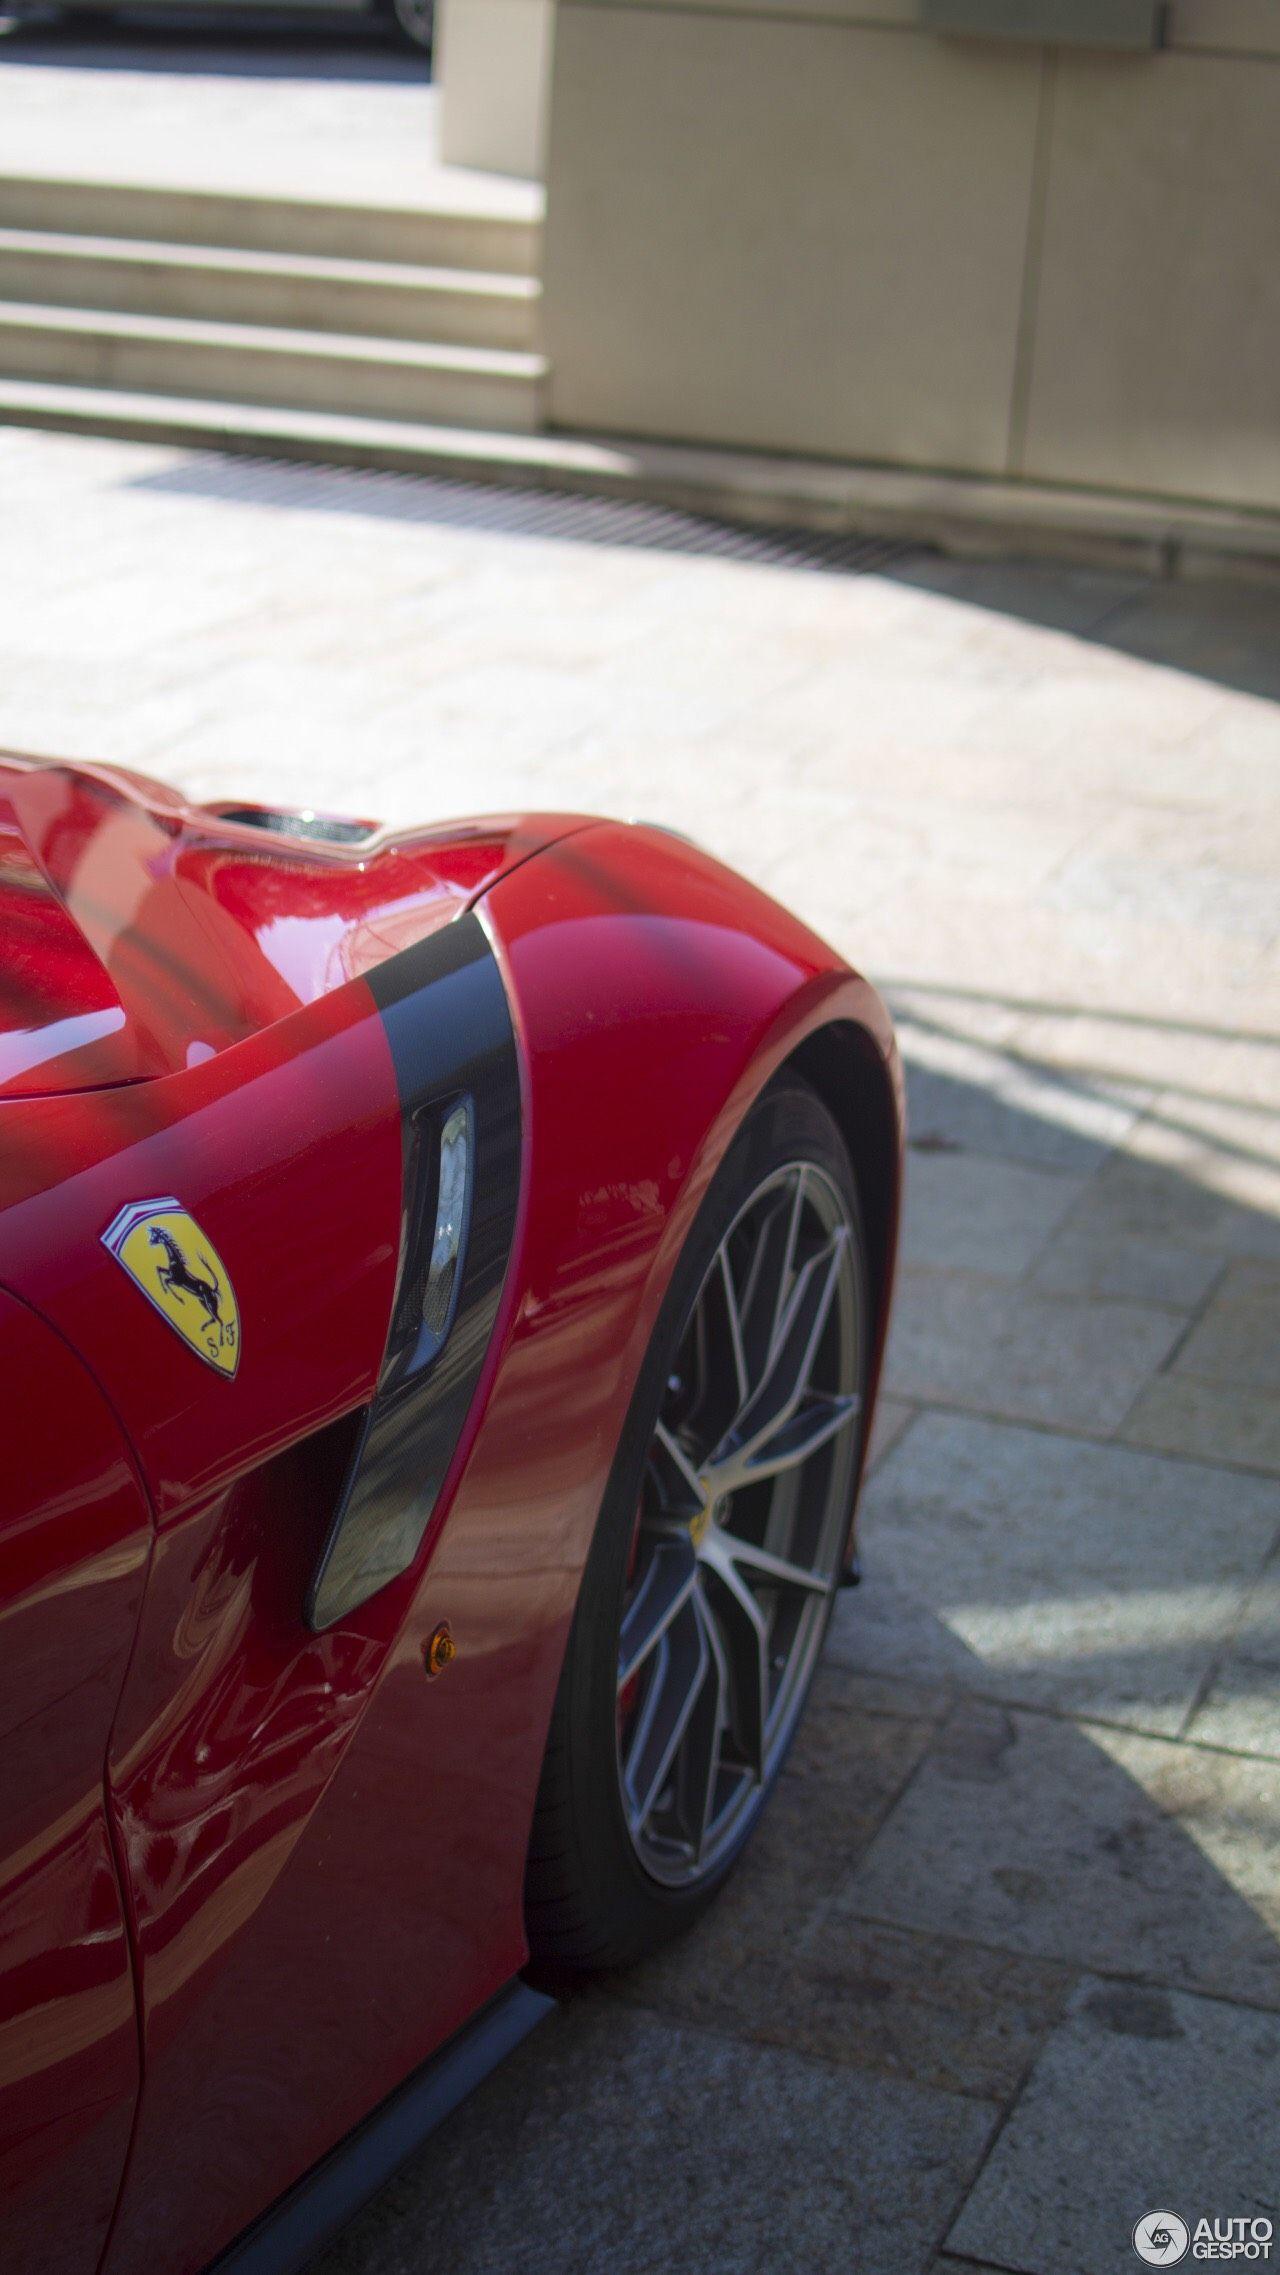 Ferrari Mobile Wallpapers - Top Free Ferrari Mobile Backgrounds ...